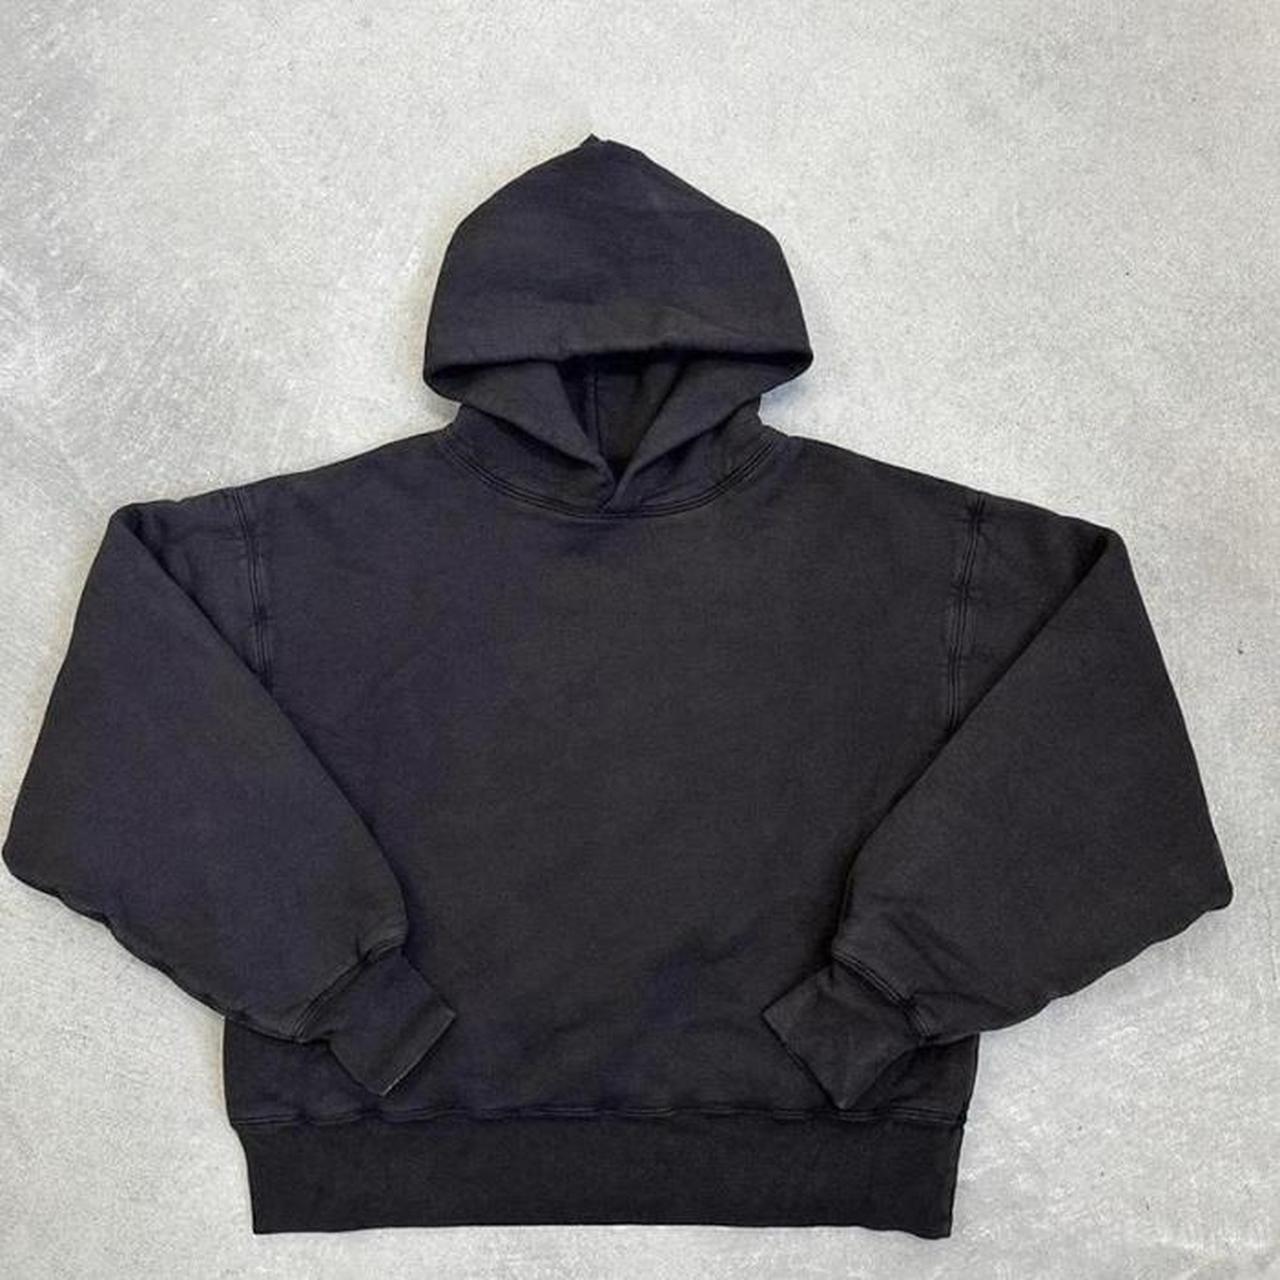 Yeezy x gap double layer perfect hoodie sample by LA... - Depop